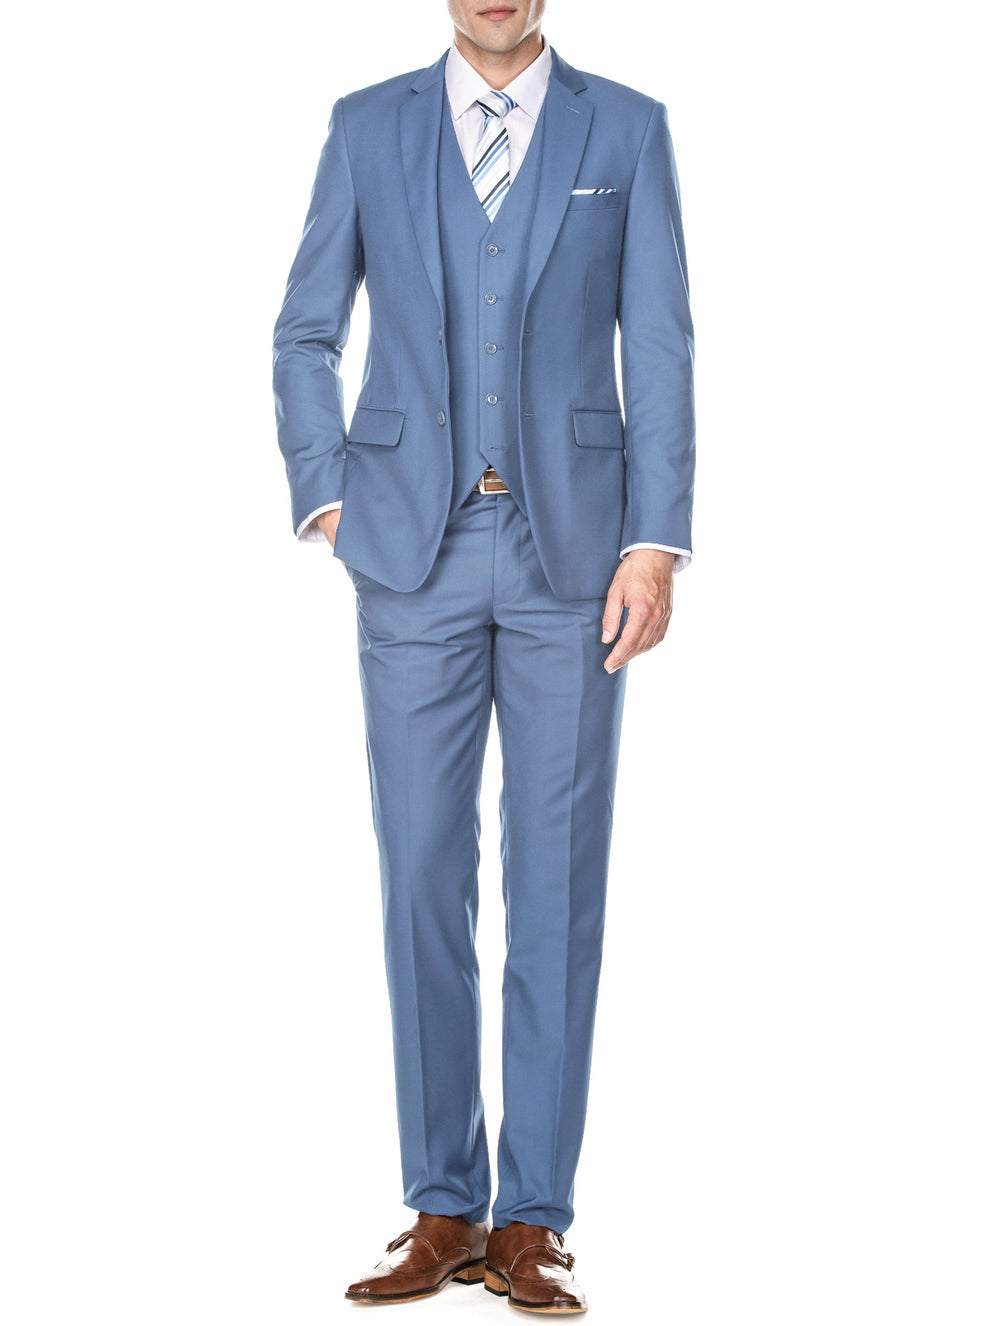 Braveman Men's 3-Piece Slim Fit Suit M300 in Slate Blue